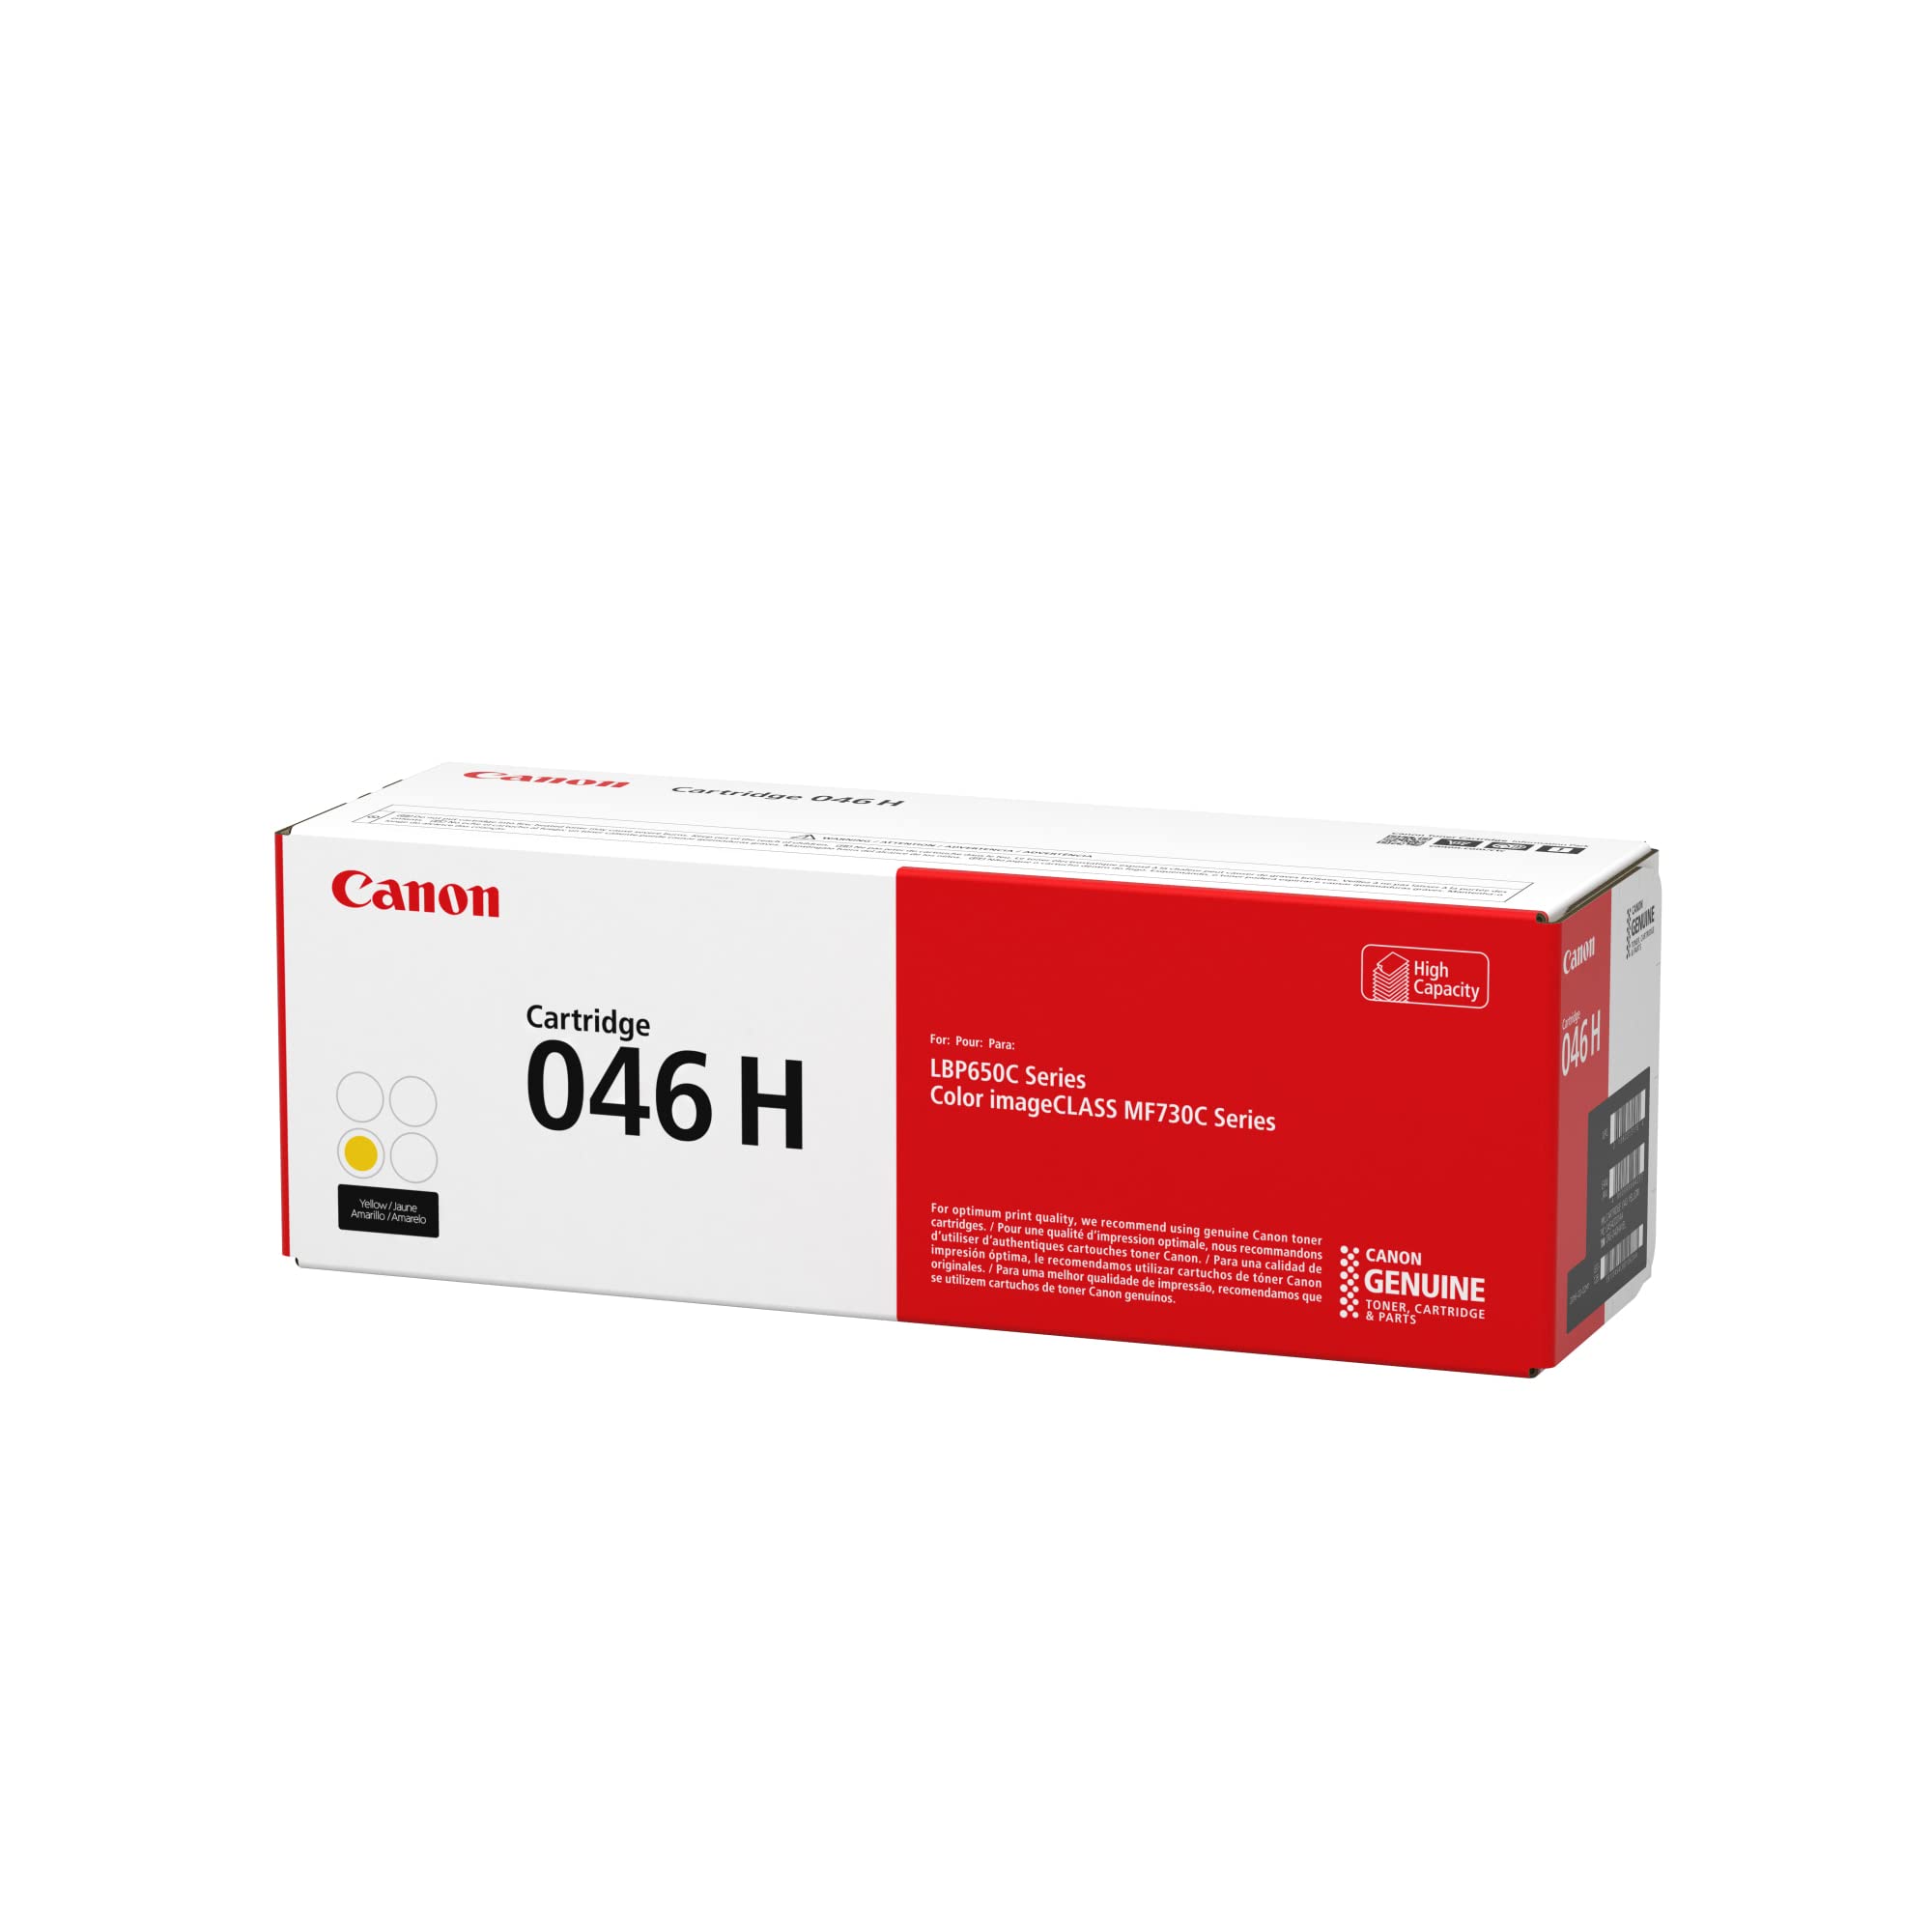 Canon Genuine Toner, Cartridge 046 Yellow, High Capacity (1251C001), 1 Pack Color imageCLASS MF735Cdw, MF733Cdw, MF731Cdw, LBP654Cdw Laser Printers